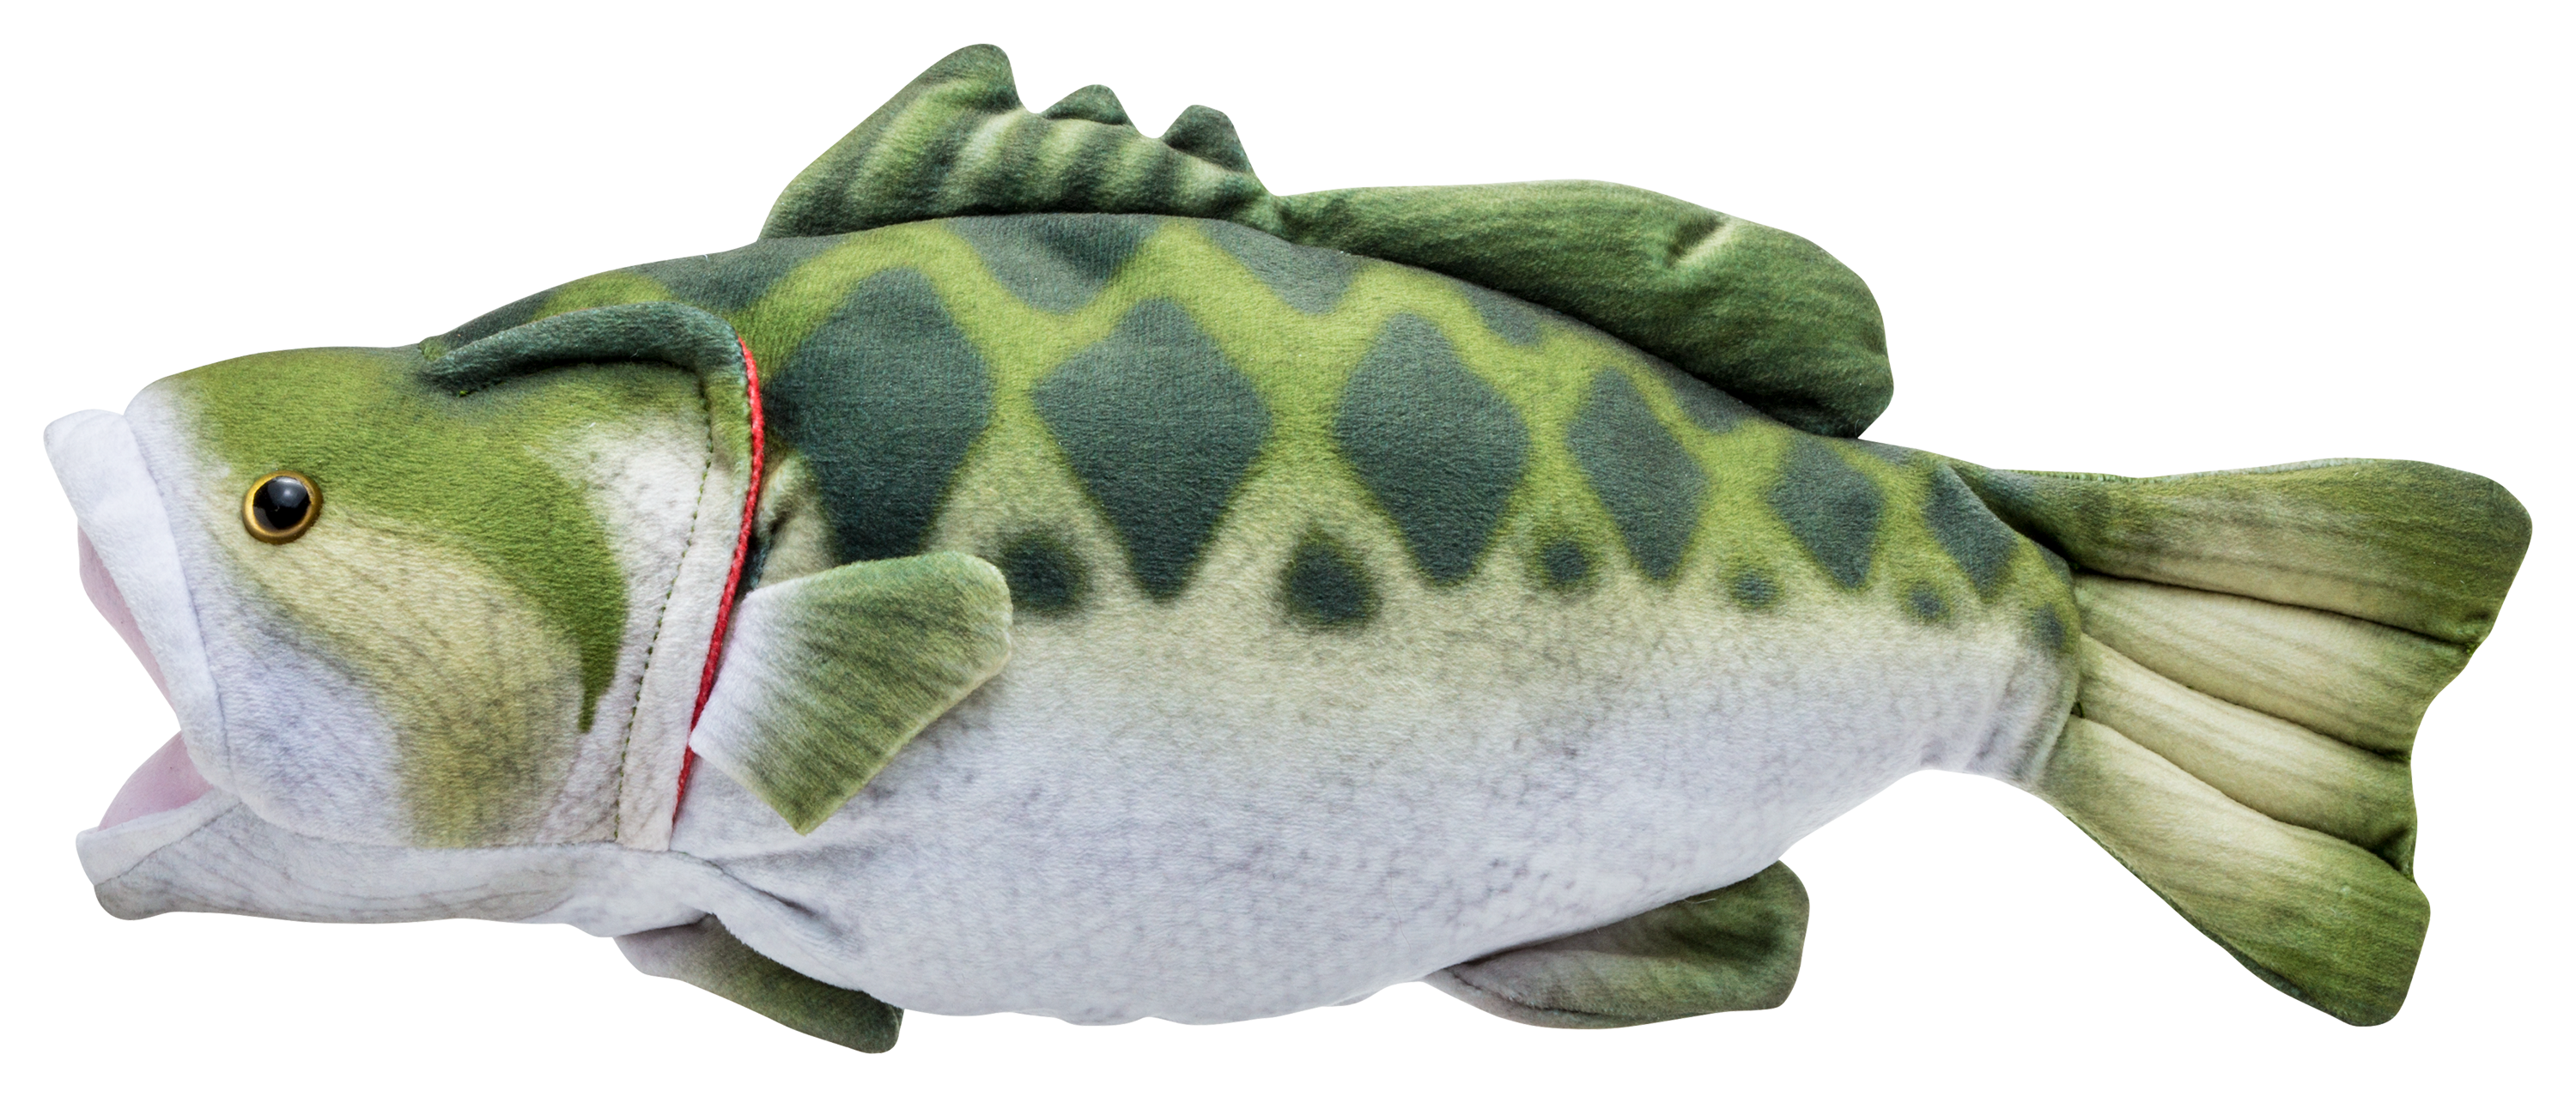 Largemouth Bass, Big Mouth, Bucketmouth, Fish, Realistic, Lifelike, Stuffed, Soft, Toy, Educational, Animal, Kids, Gift, Very Nice Plush Animal 17